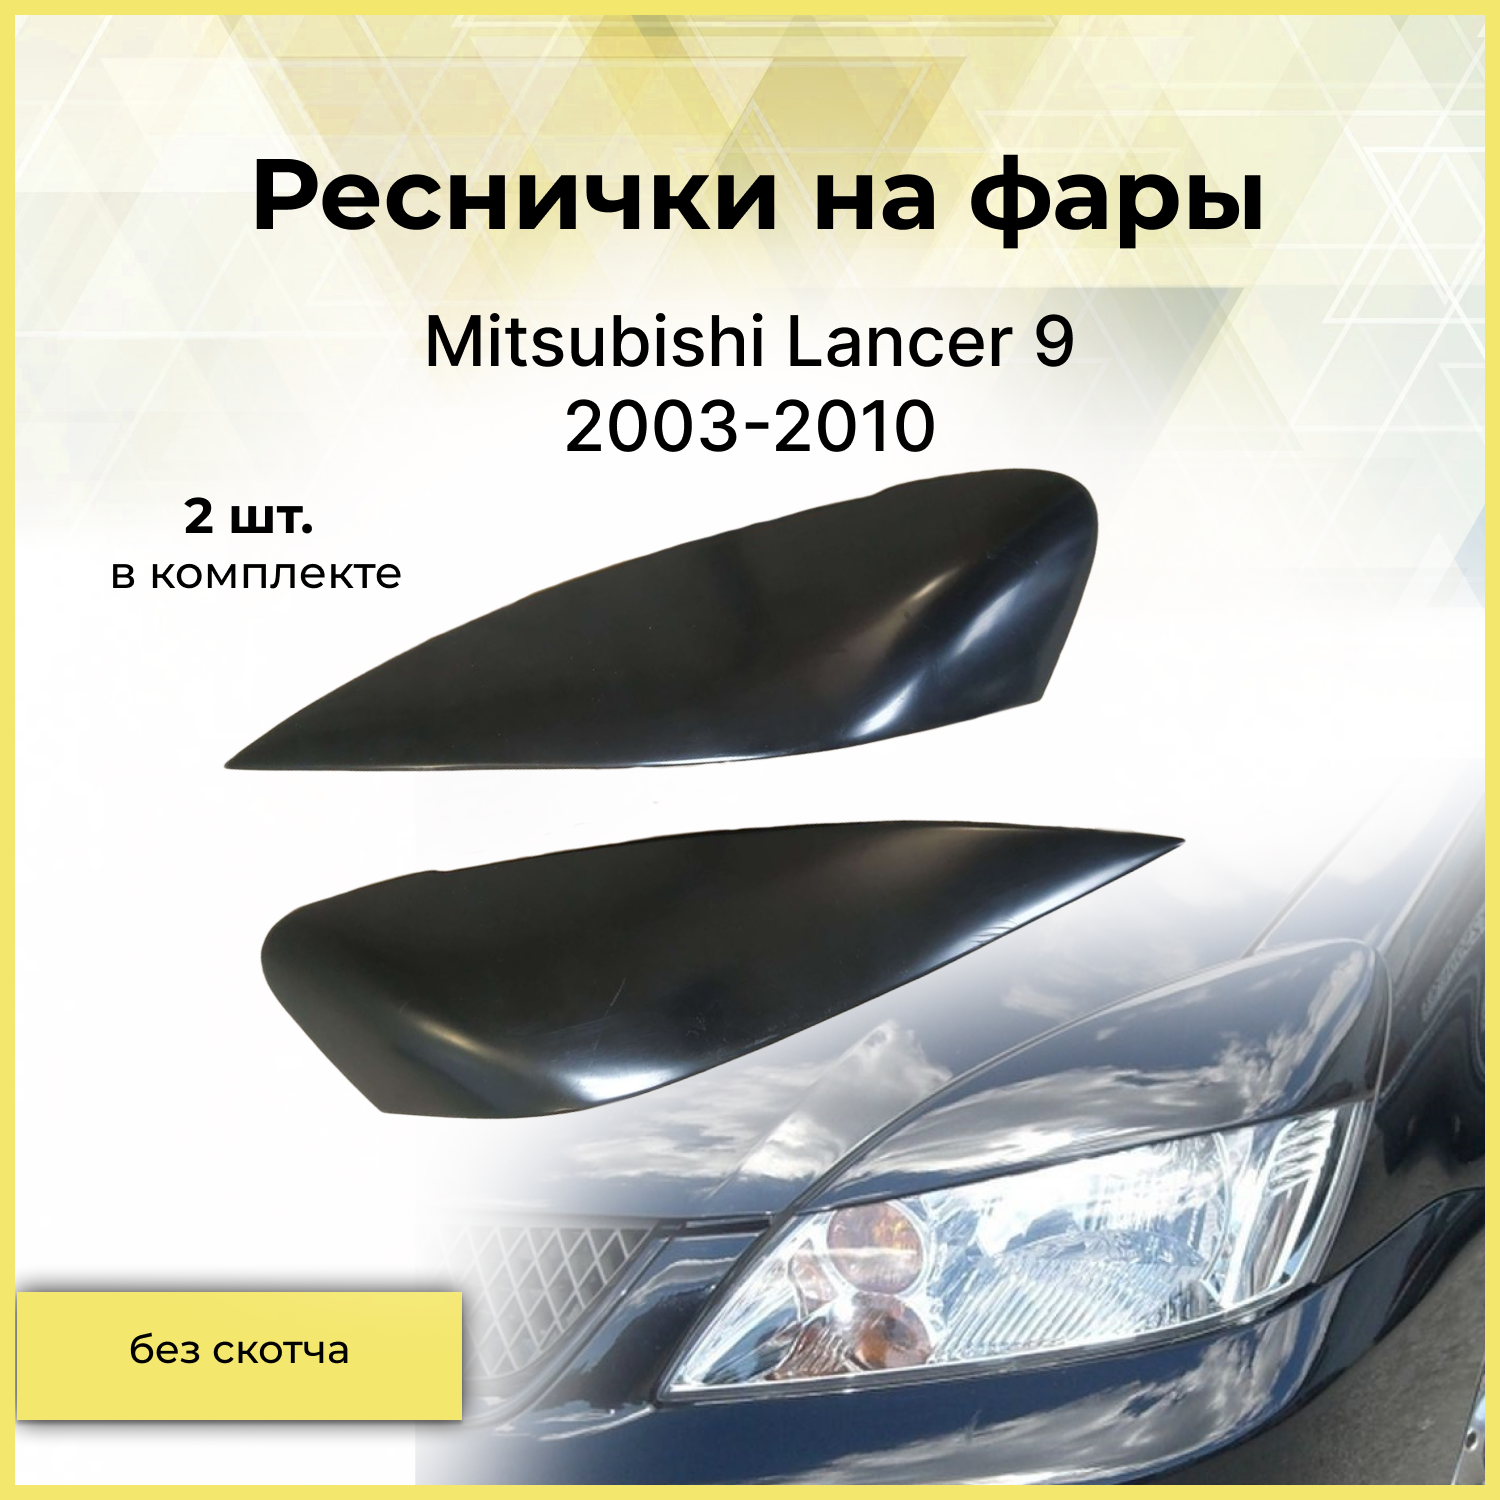 Накладки на фары широкие (реснички) для Mitsubishi Lancer 9 (2003-2010)